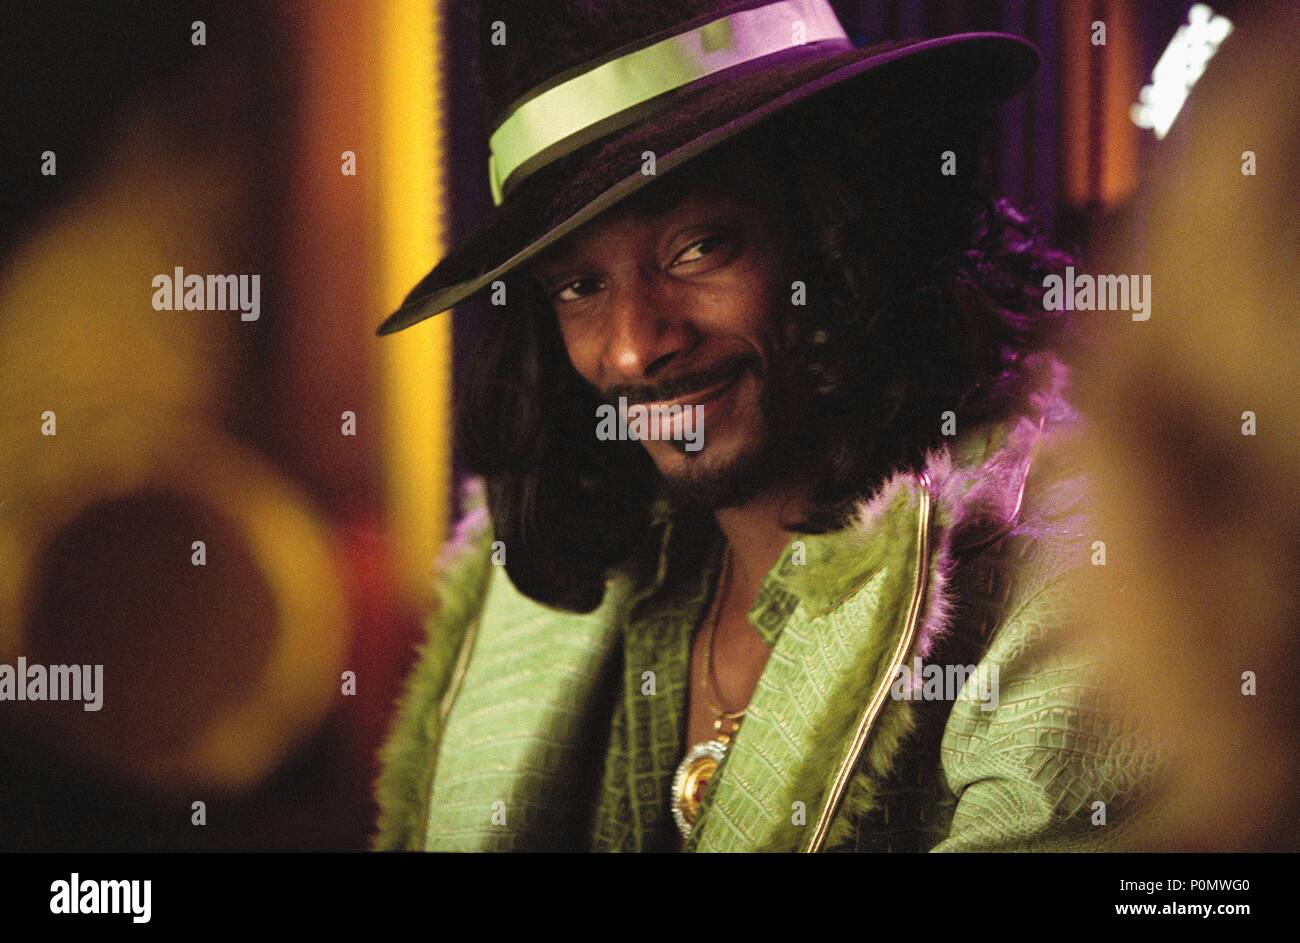 Original Film Titel: Starsky & Hutch. Englischer Titel: Starsky & Hutch. Regisseur: Todd Phillips. Jahr: 2004. Stars: Snoop Dogg. Credit: WARNER BROS./MIRAMAX/Album Stockfoto